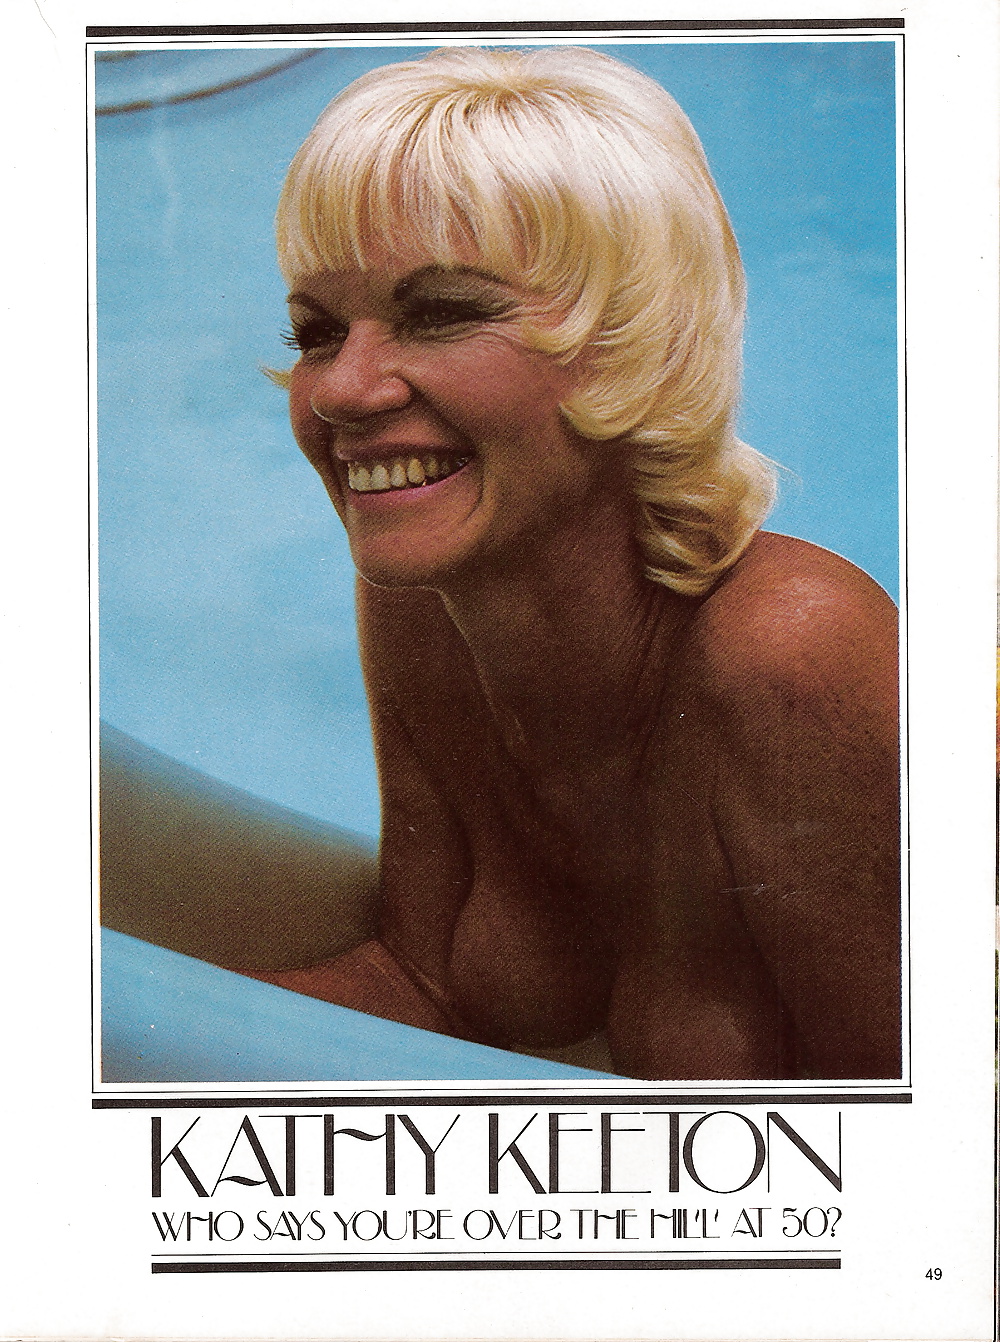 Hustler - Sept 1975 - Kathy Keeton - Over The Hill At 50? #27250986